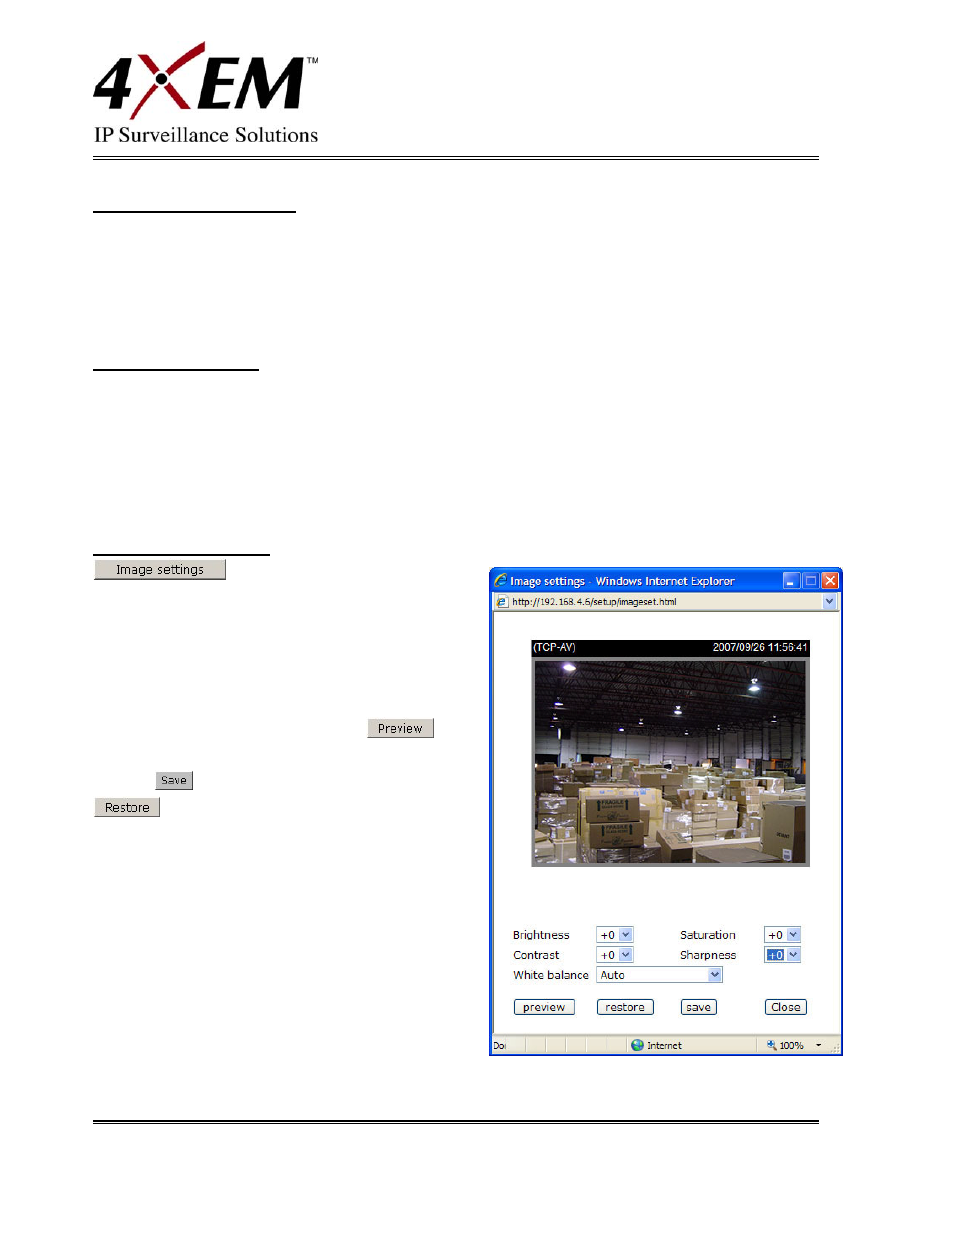 General, Video settings, Video orientation | Audio settings, Image settings | 4XEM IPCAMW45 User Manual | Page 26 / 57